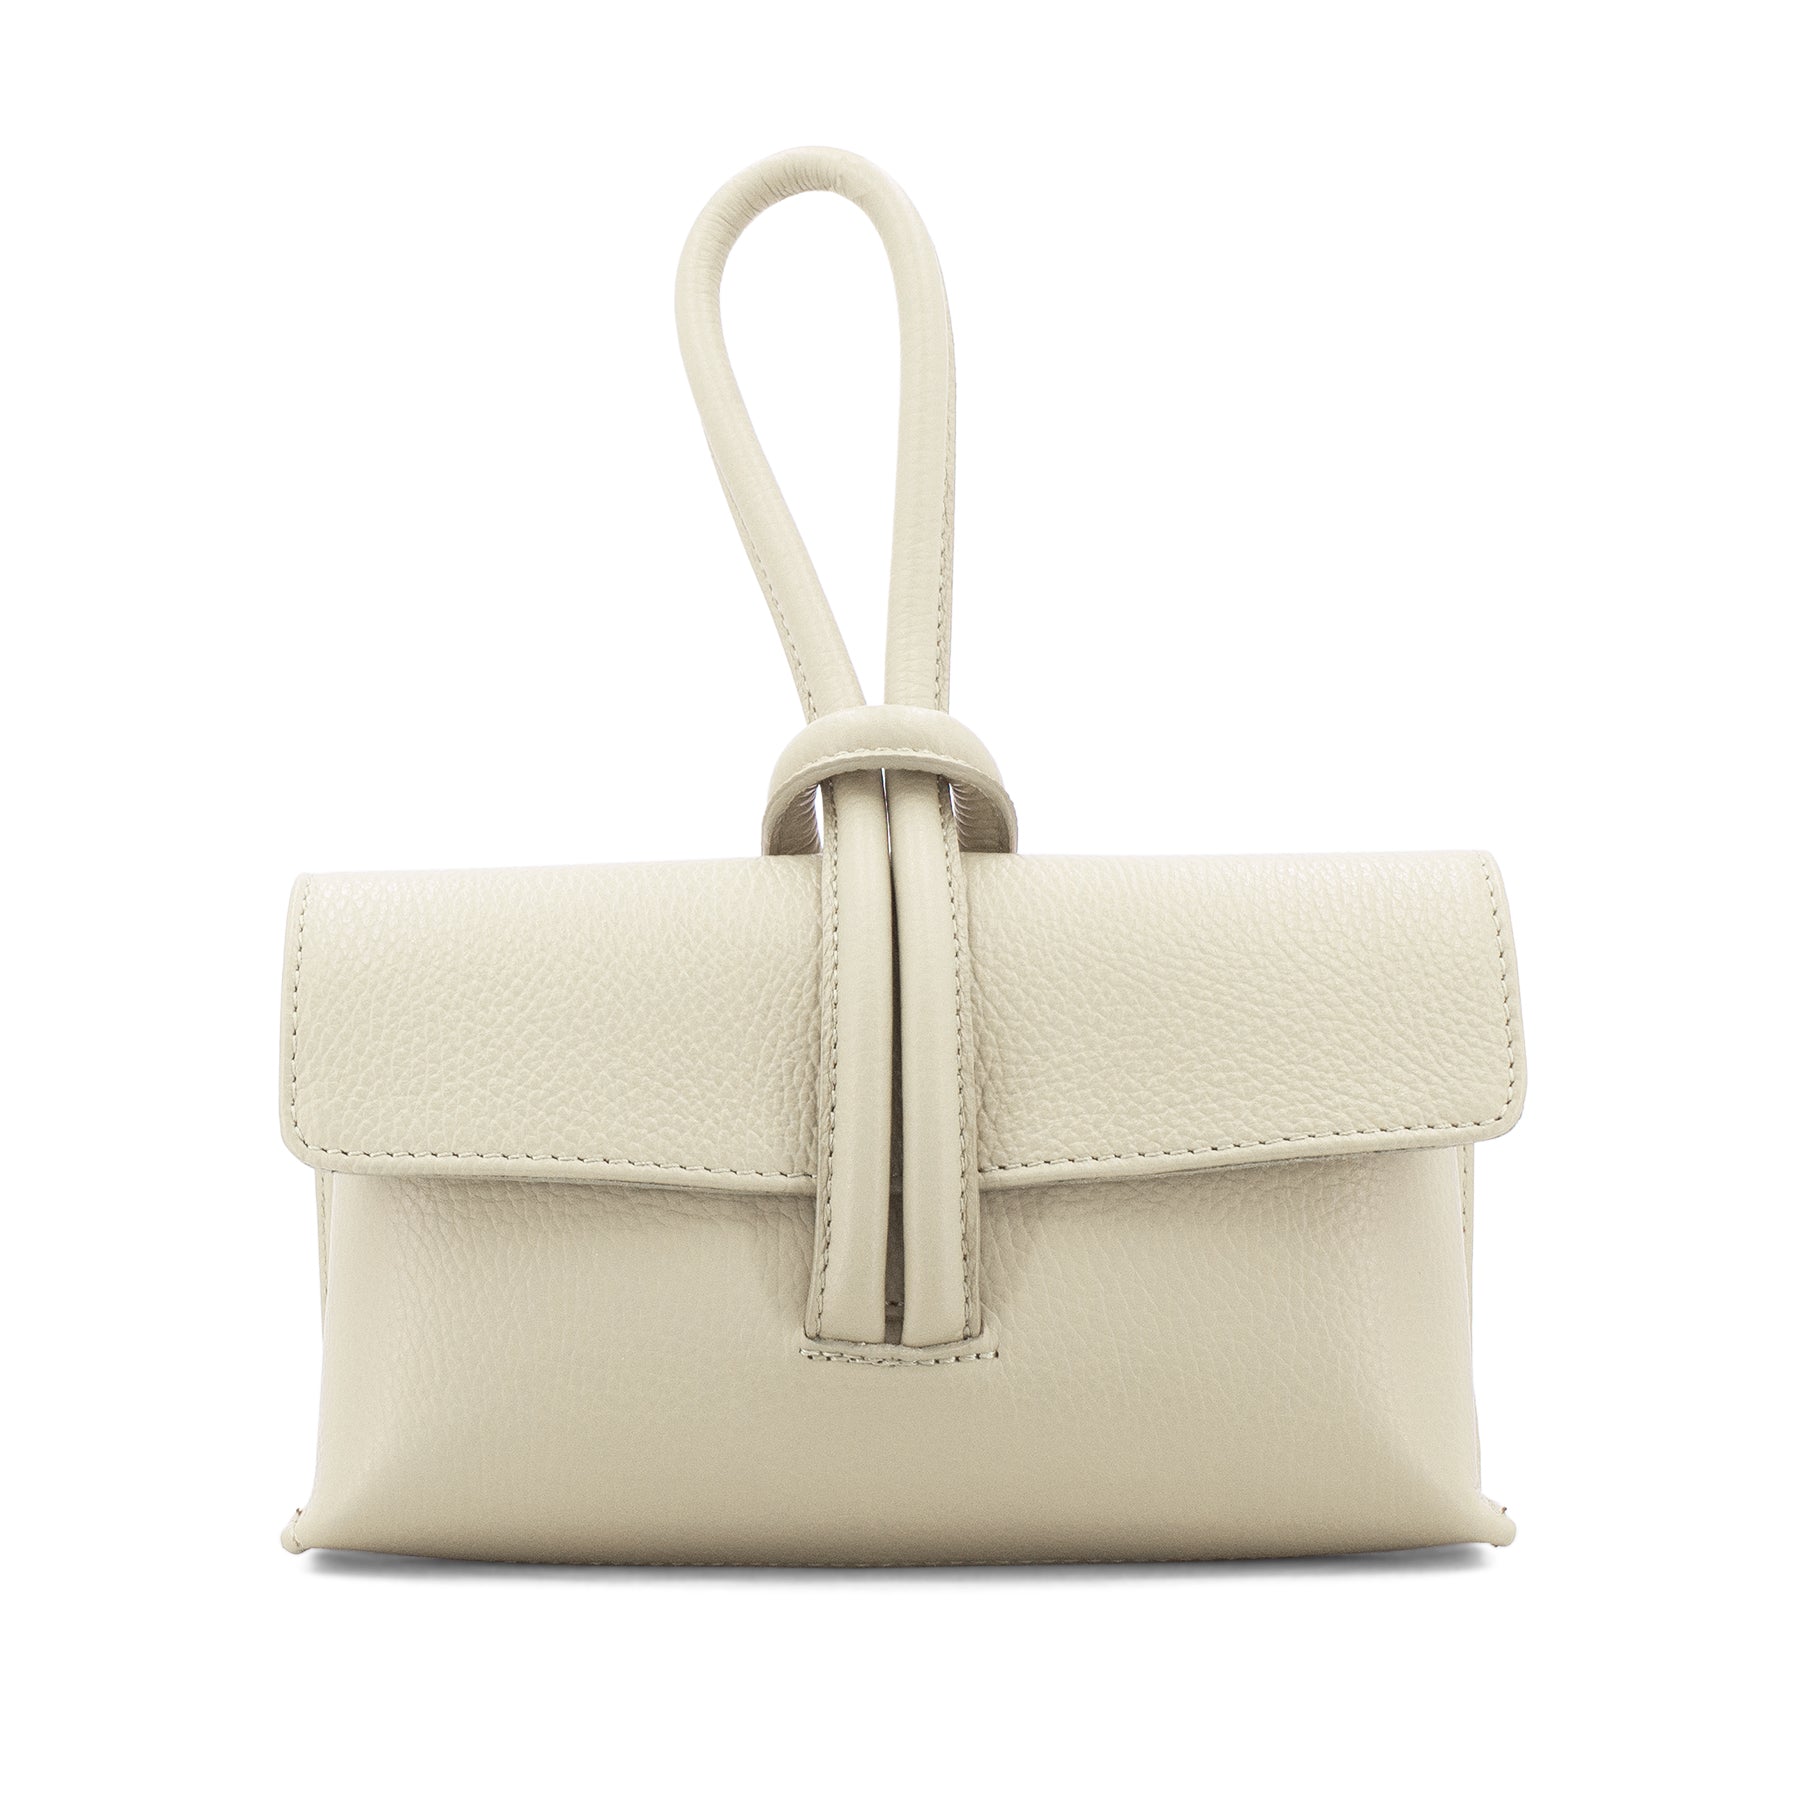 lusciousscarves Handbags Cream Italian Leather Clutch Bag, Evening Bag with a Loop Handle